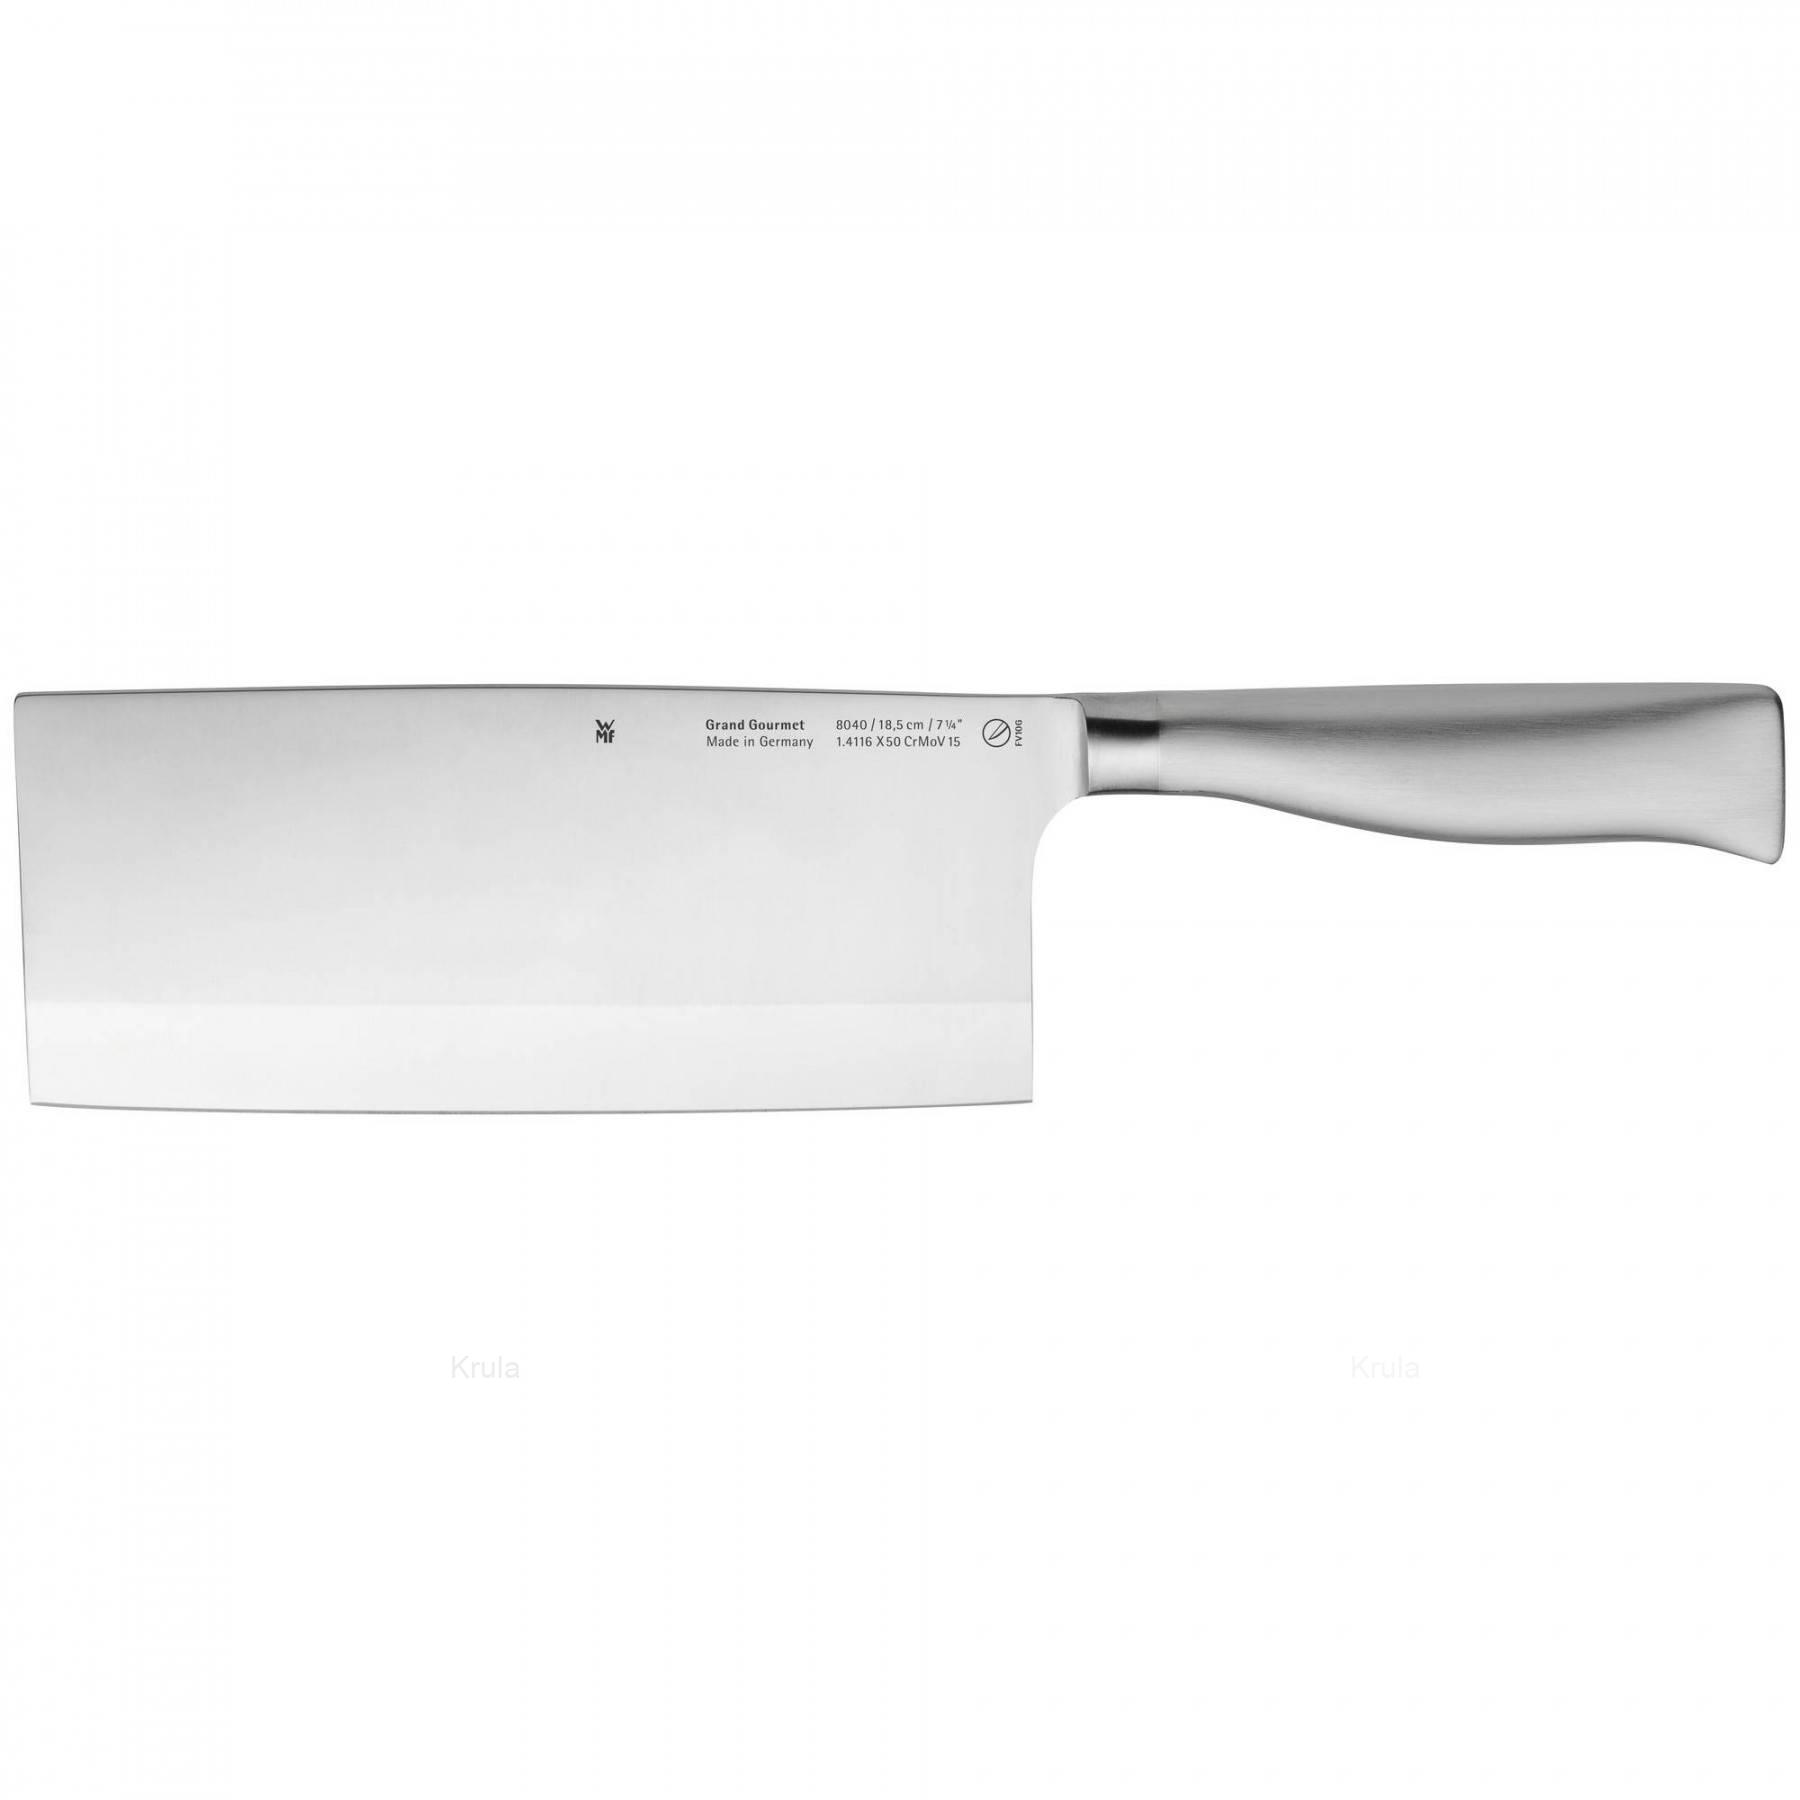 Čínský kuchařský nůž Grand Gourmet, PC, 18,5 cm - WMF